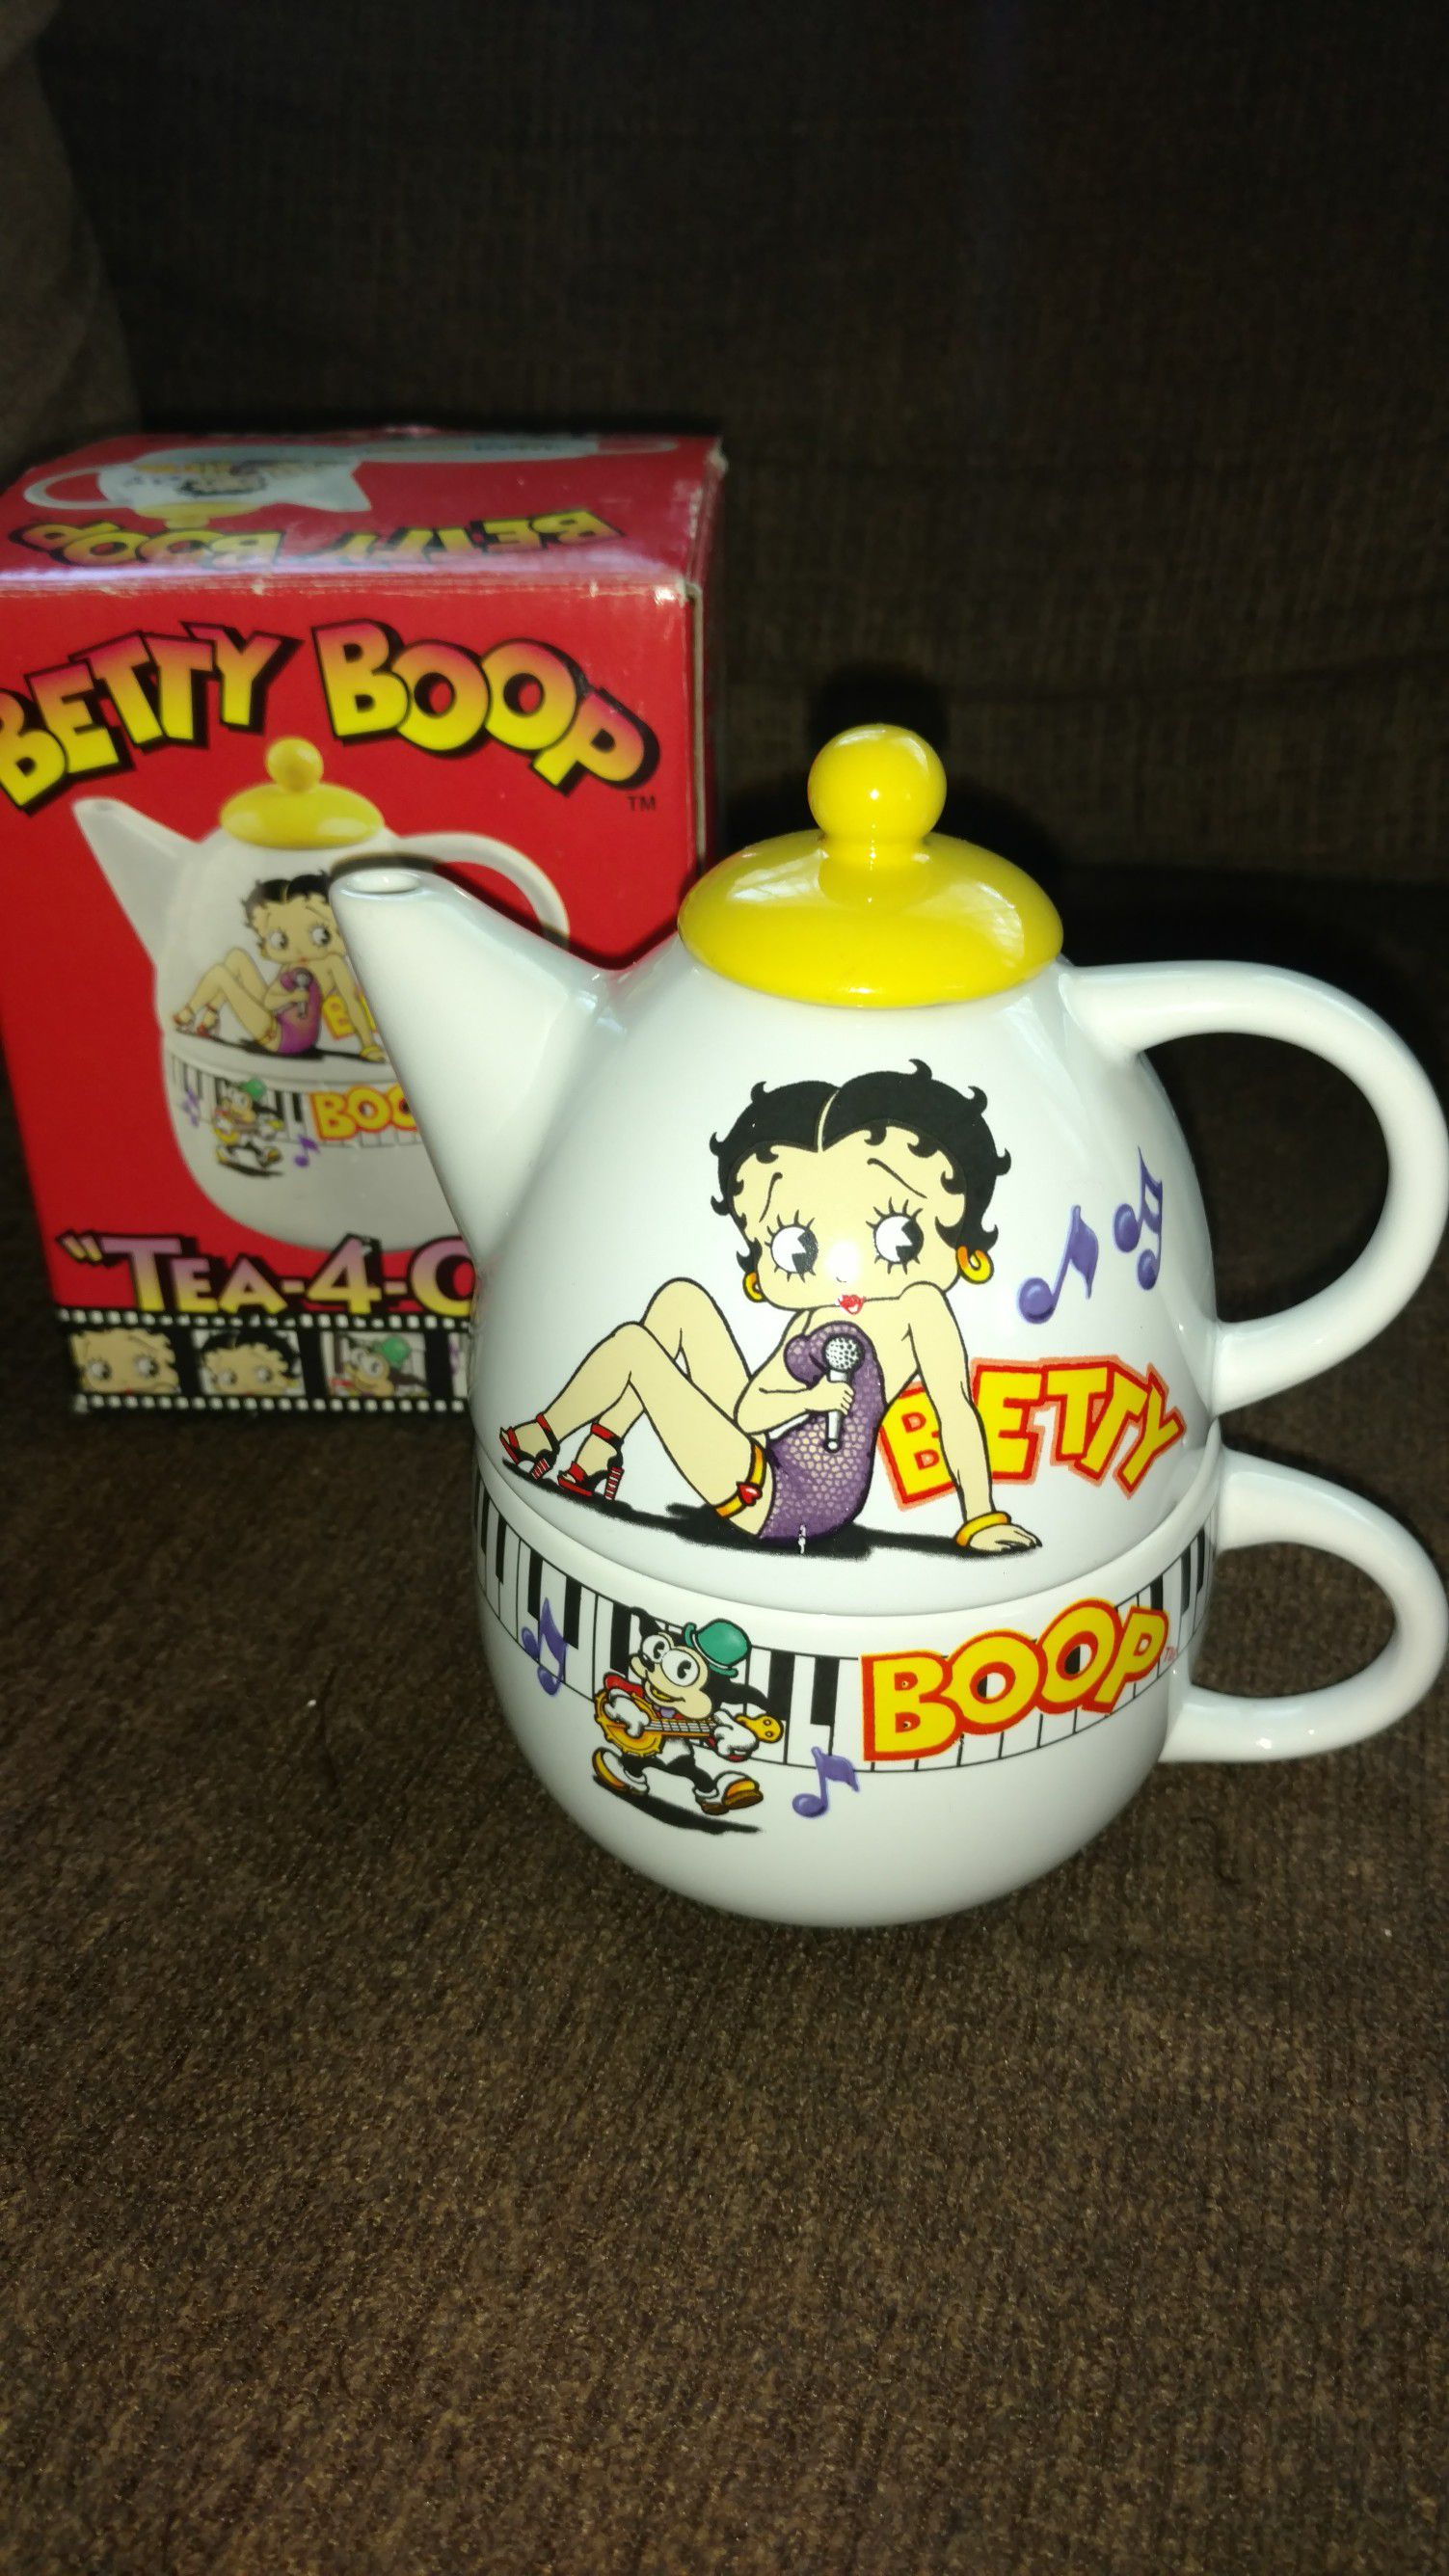 Betty Boop tea 4 one- new in box